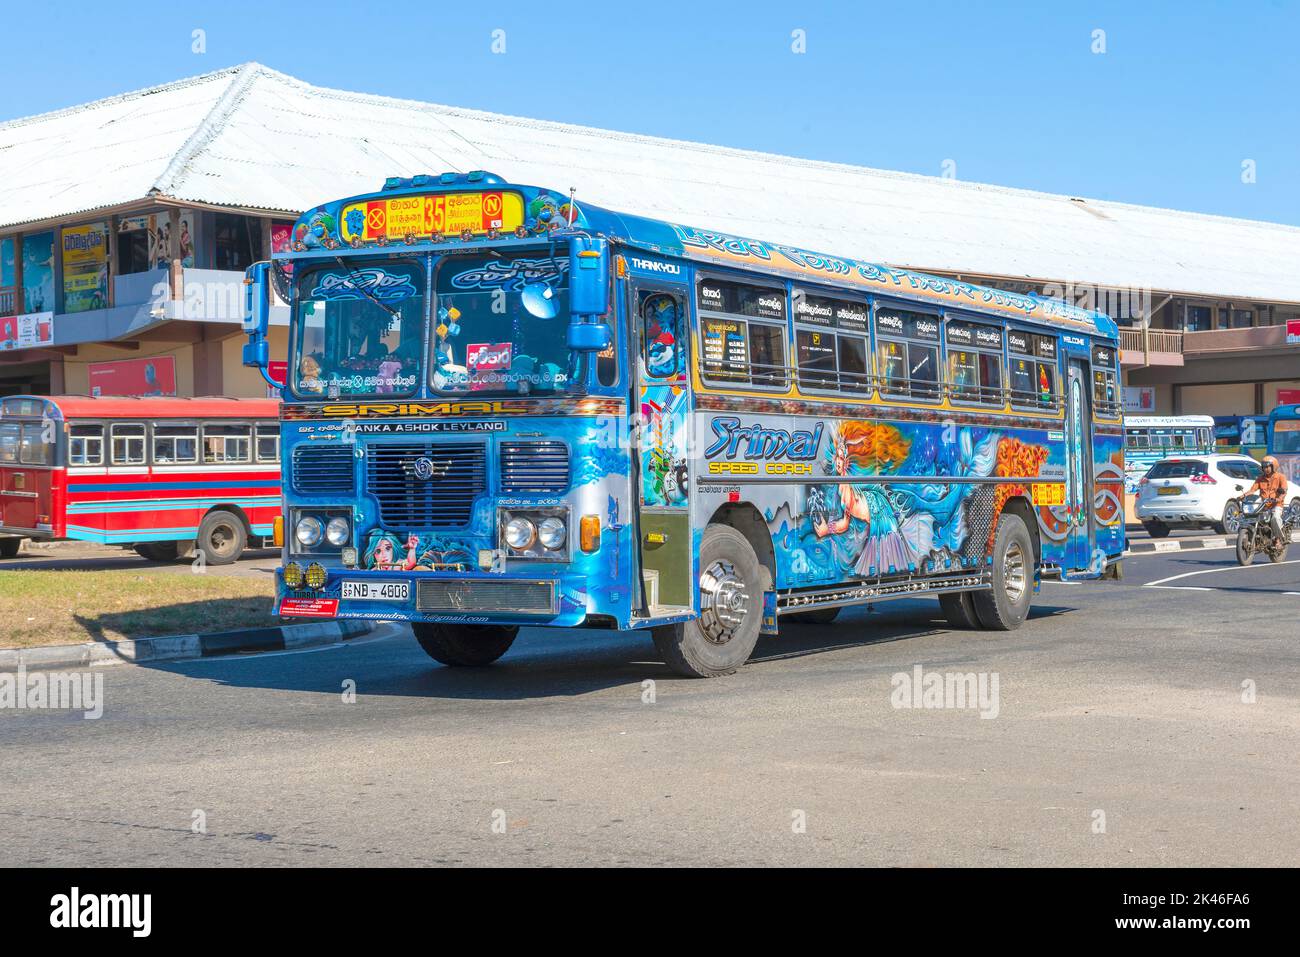 MATARA, SRI LANKA - FEBRUARY 17, 2020: Intercity bus with airbrushing on a city street Stock Photo